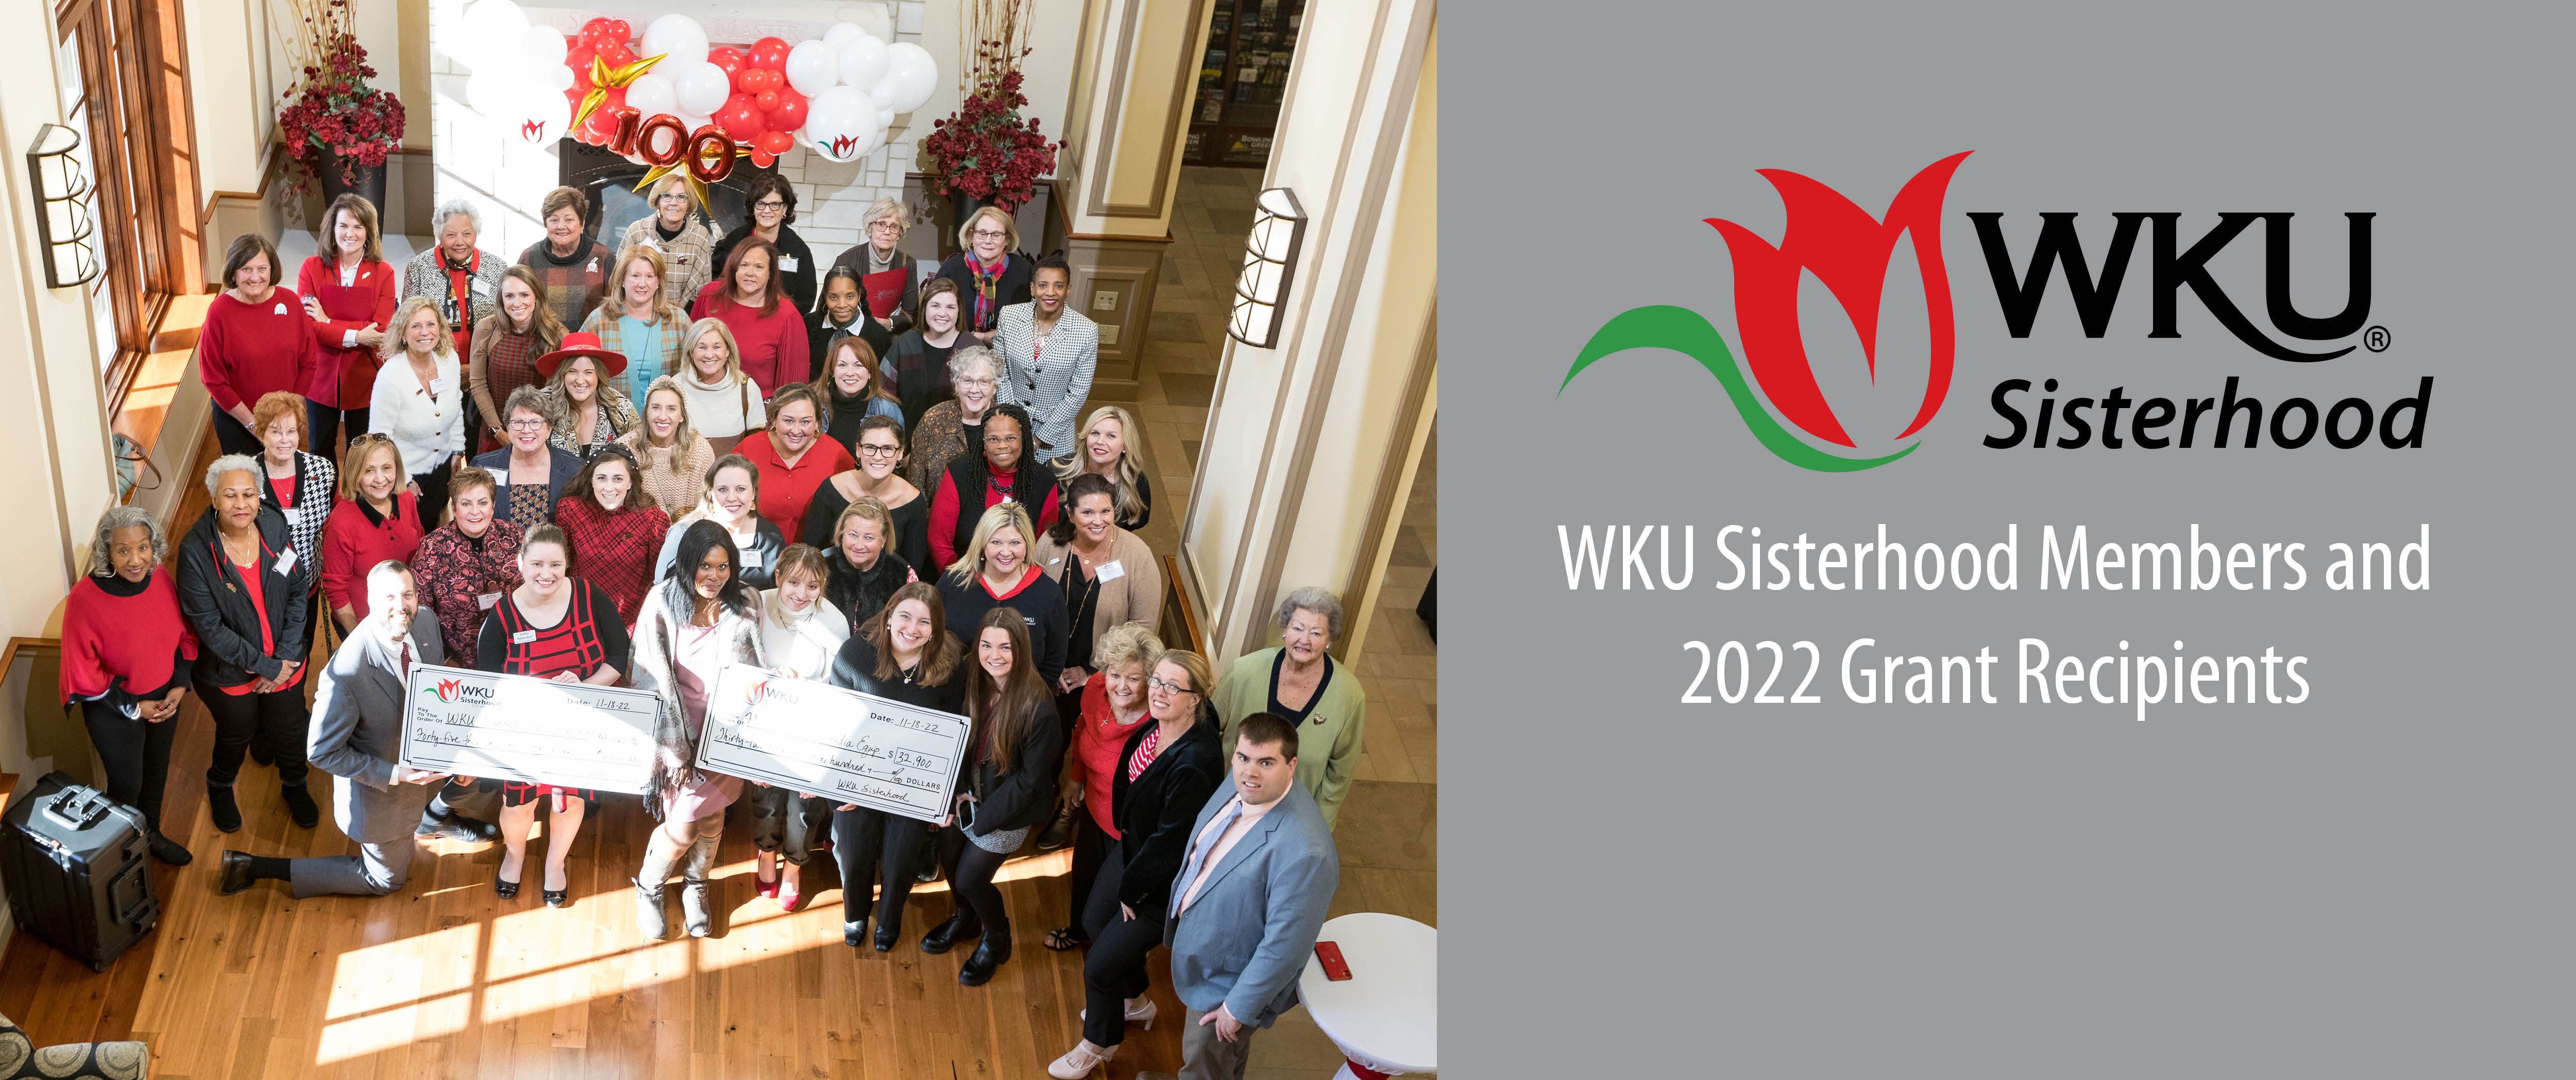 WKU Sisterhood Members and 2022 Grant Recipients